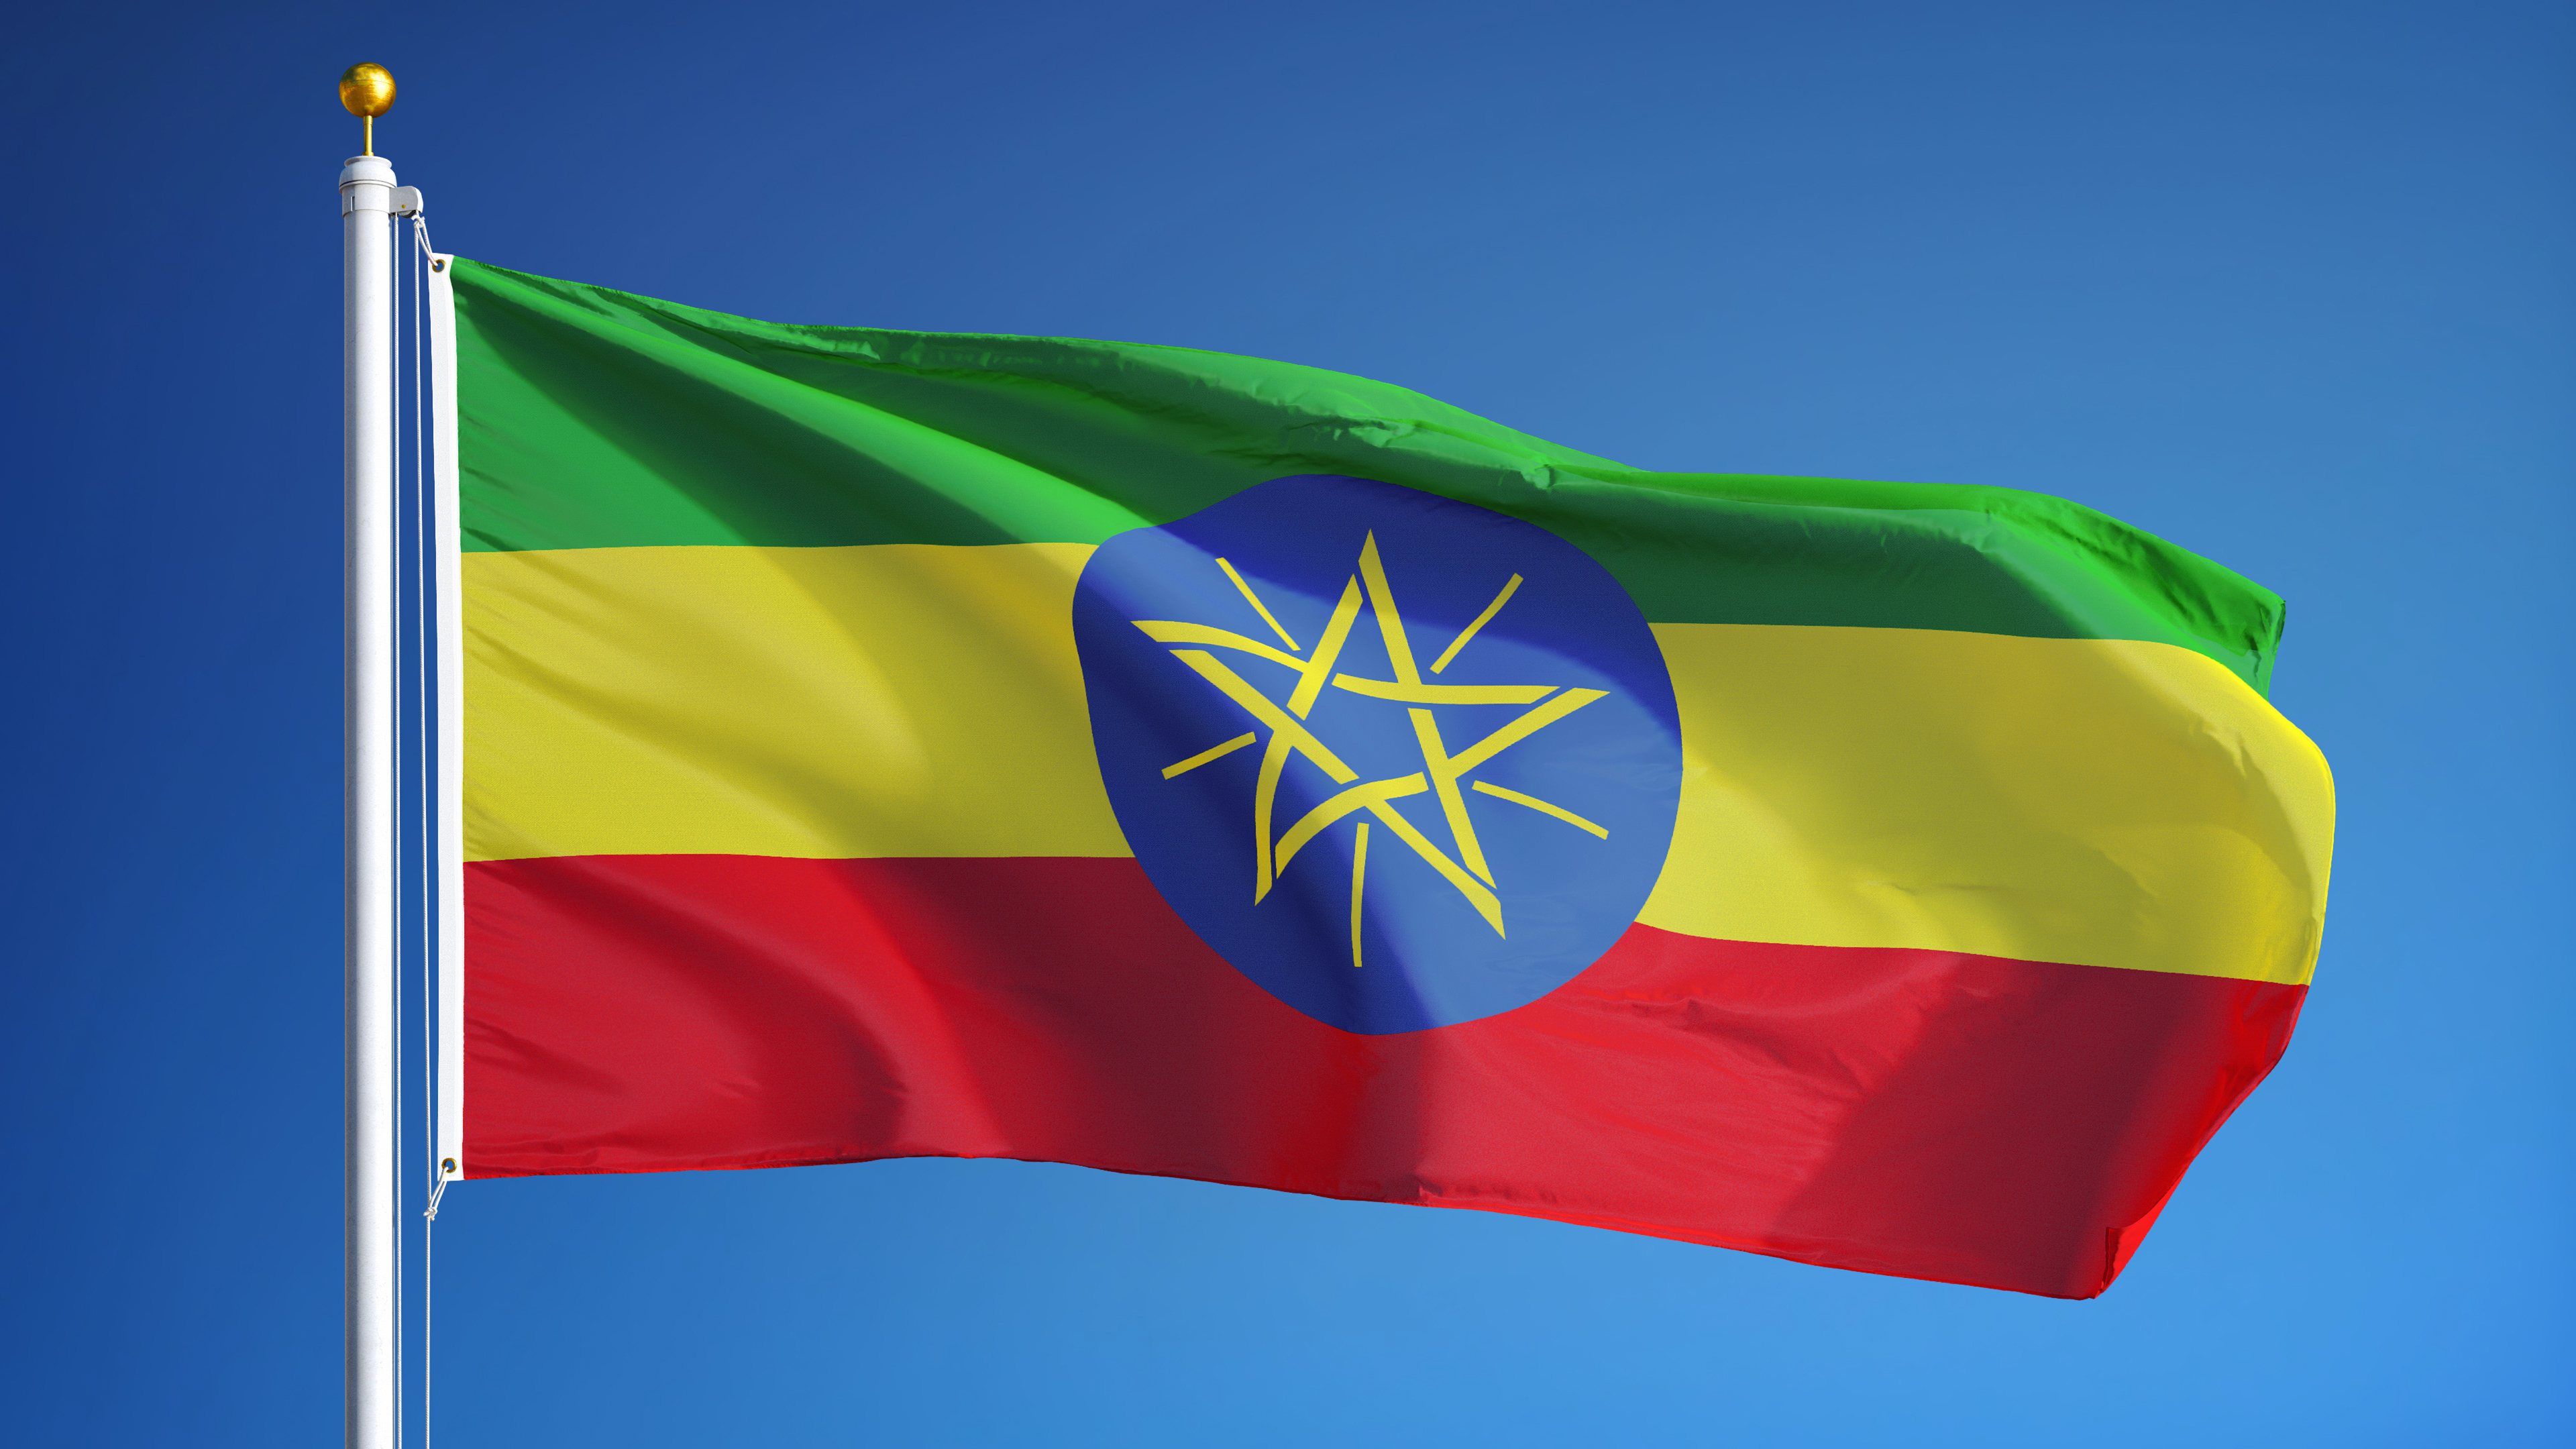 Ethiopian flag. Image courtesy of railway fx/Shutterstock.com.